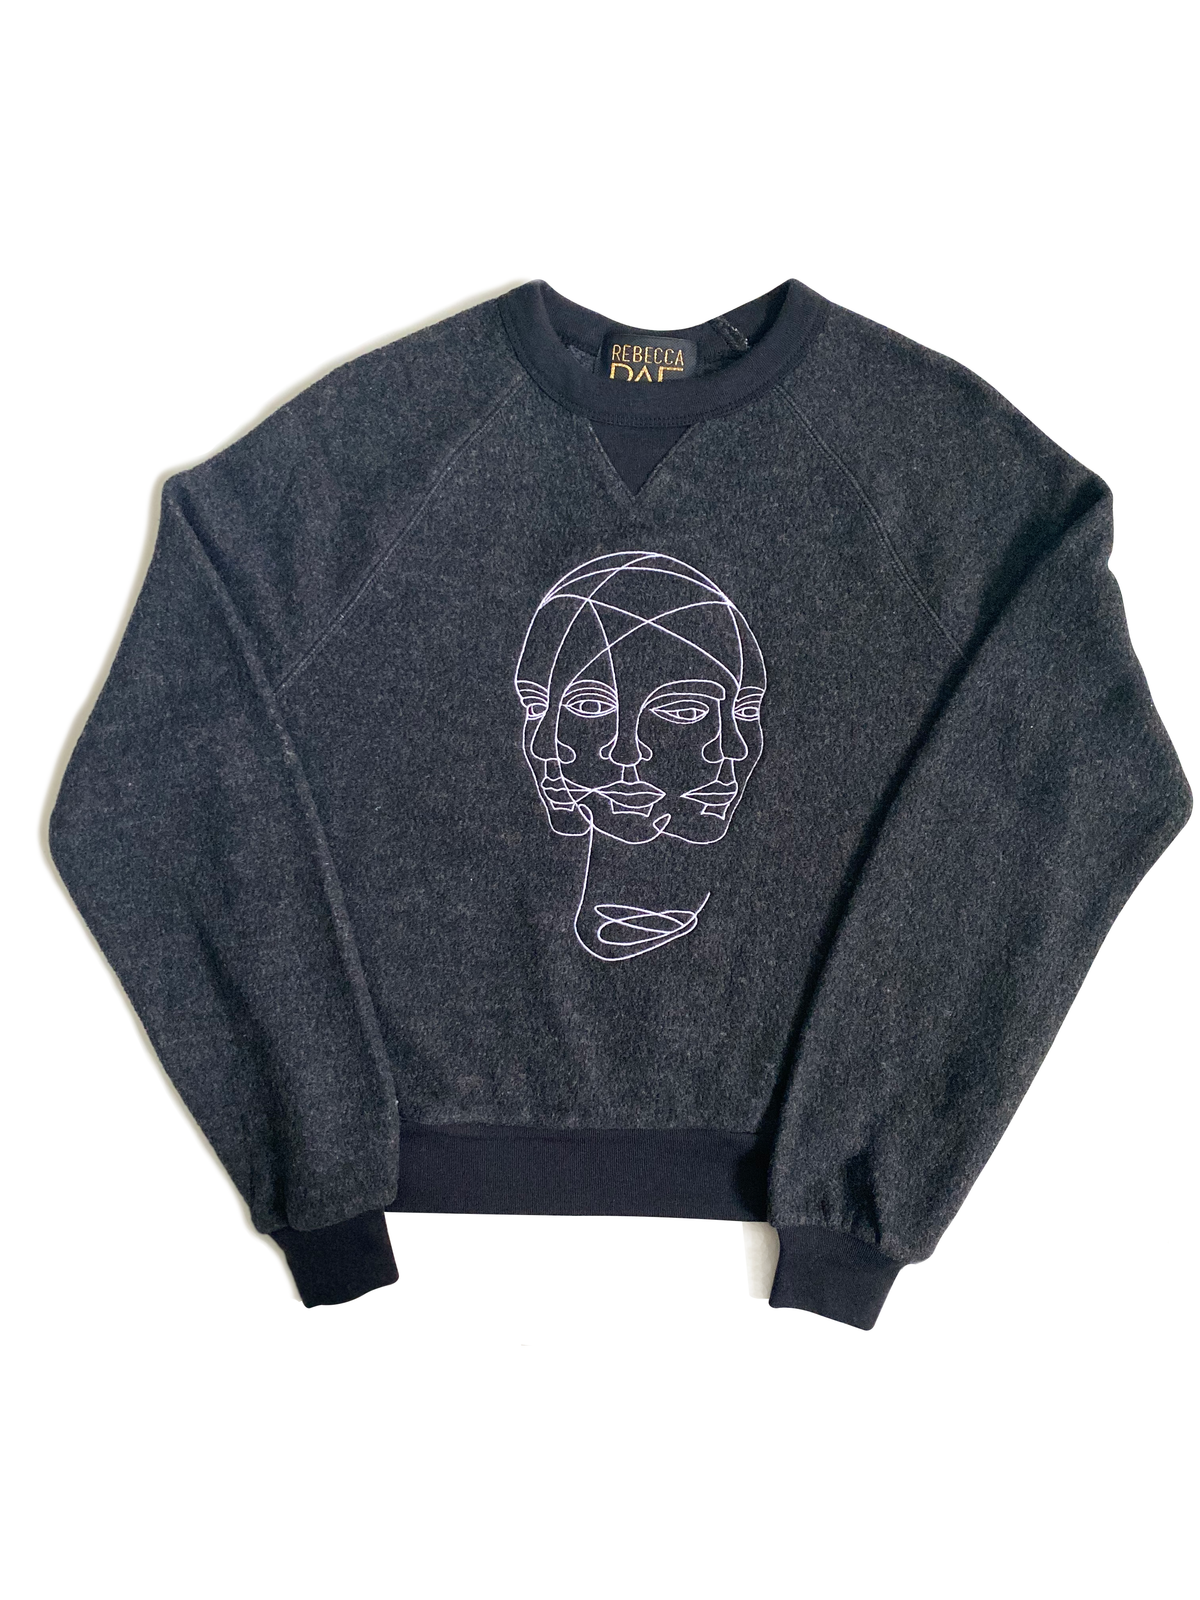 Mindfulness, Embroidered, Crewneck Crop Sweatshirt